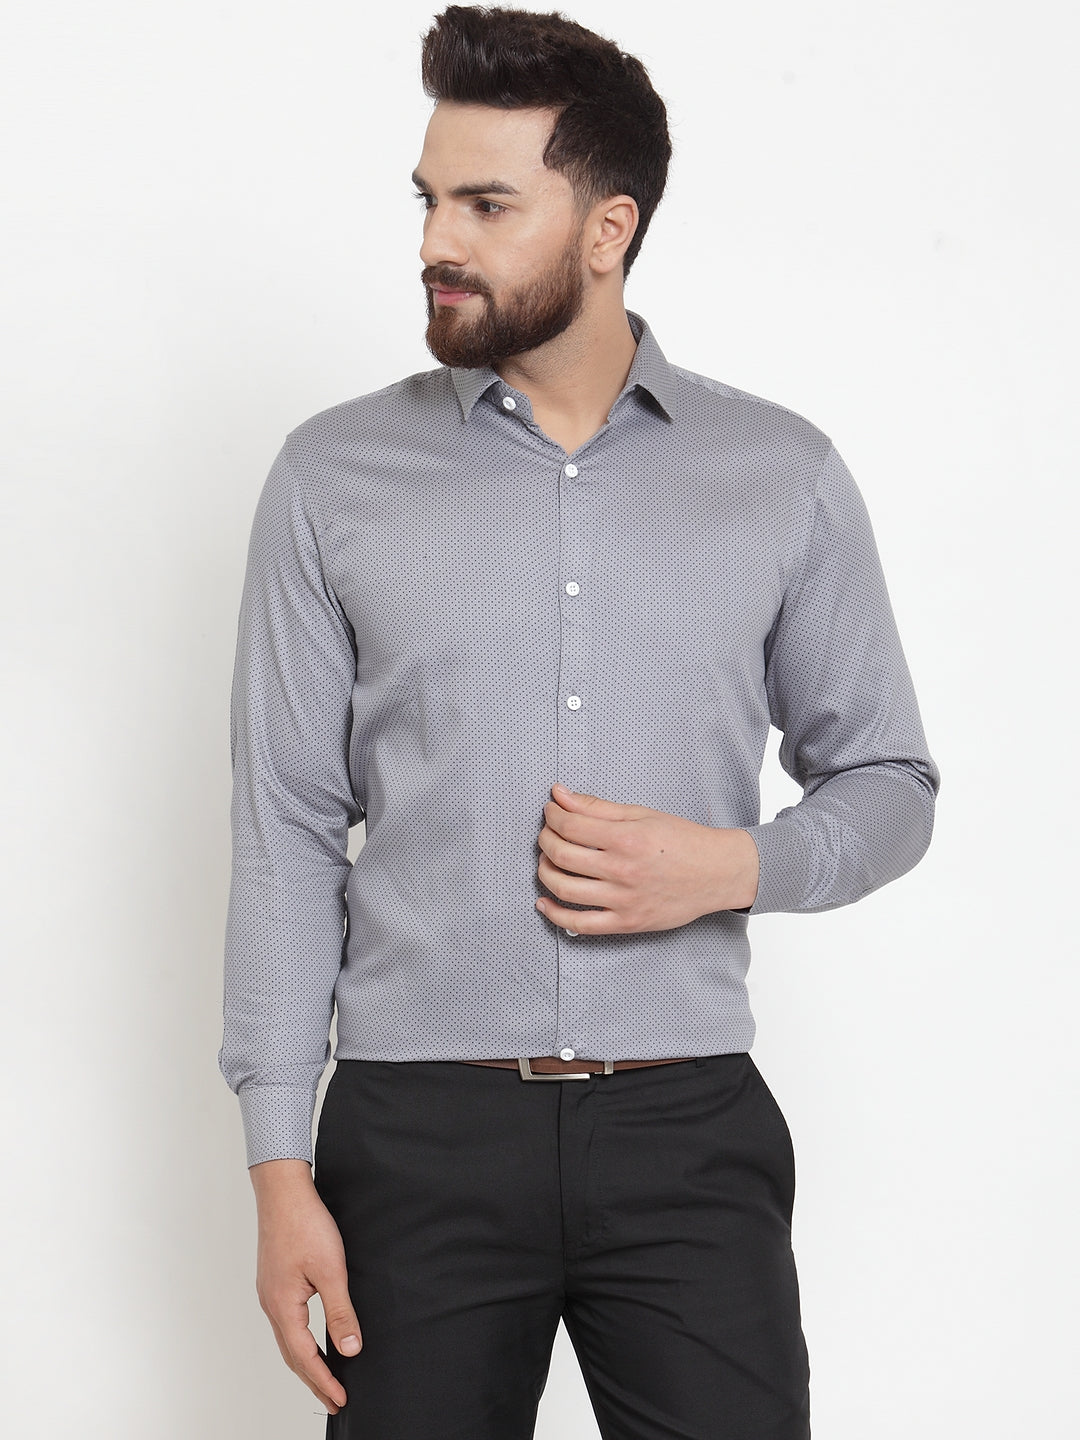 Men's Grey Cotton Polka Dots Formal Shirts ( SF 736Grey ) - Jainish